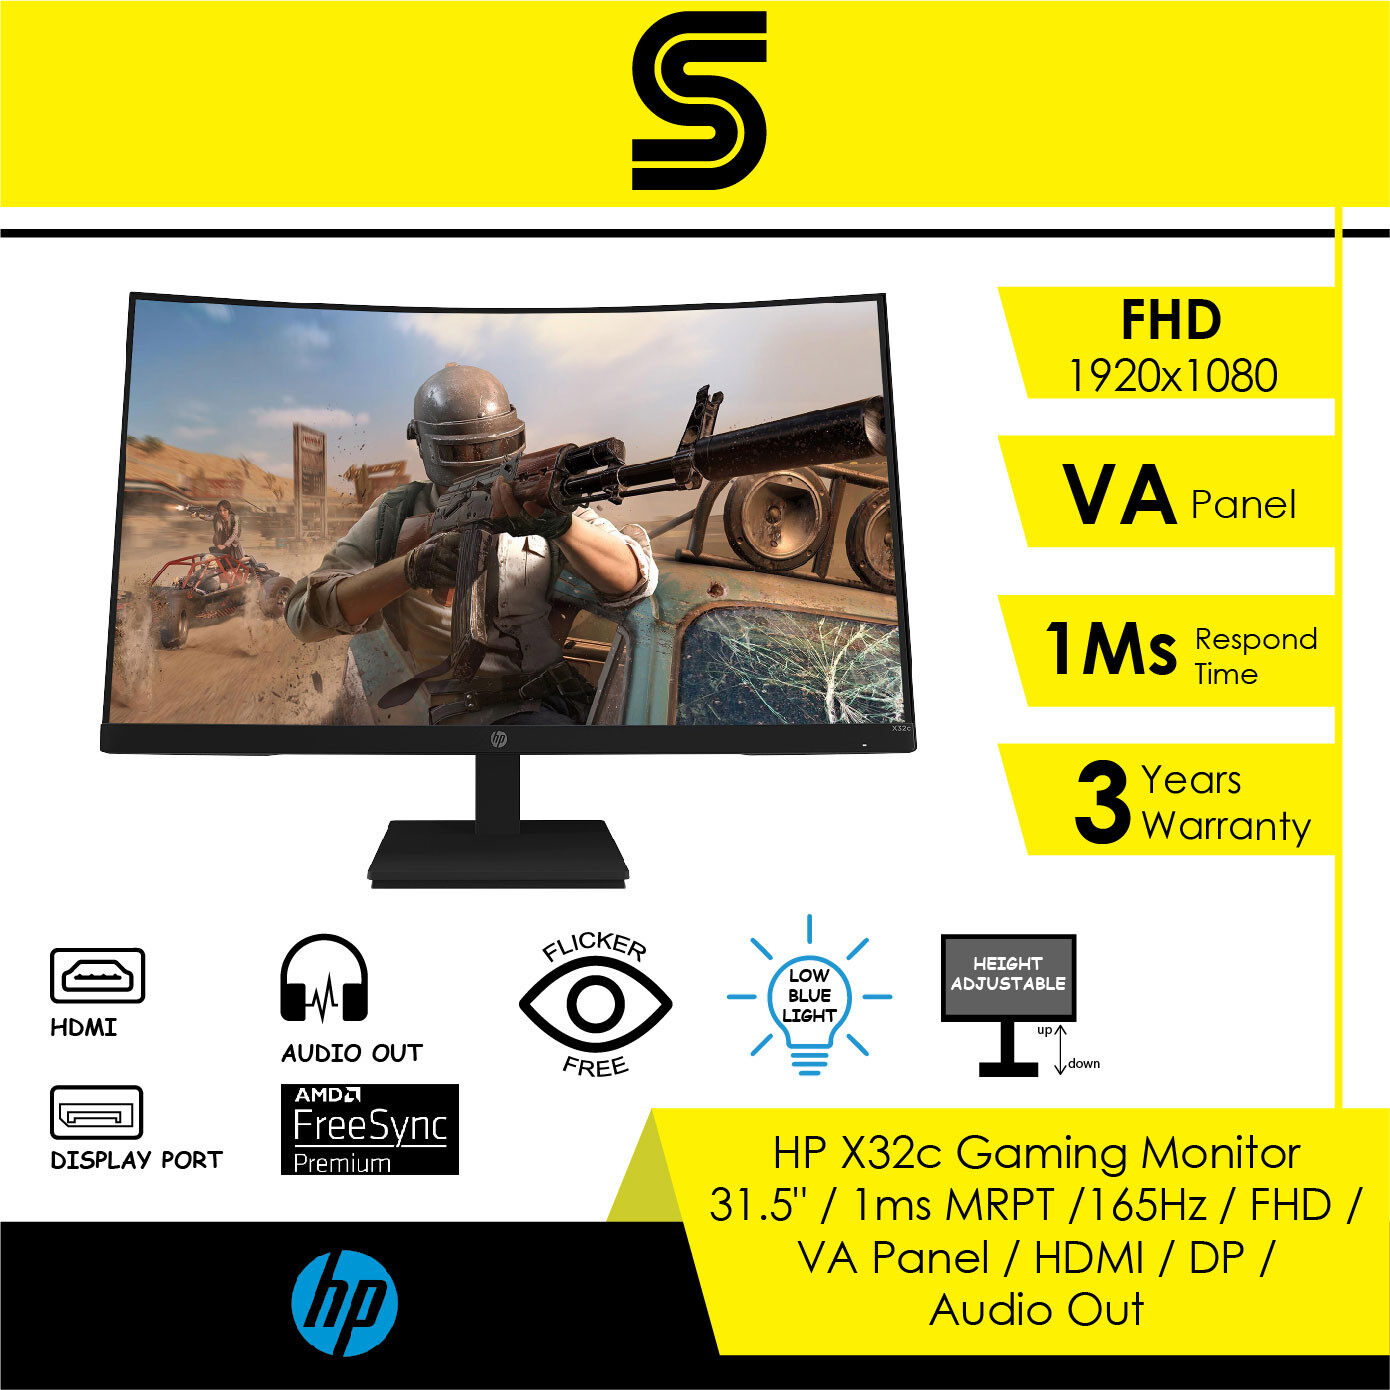 HP X32c Gaming Monitor - 31.5" / 1ms MRPT /165Hz / FHD / VA Panel / HDMI / DP / Audio Out / High Adjustable / Flicker Free / Low Blue Light / AMD Free-Sync Premium/